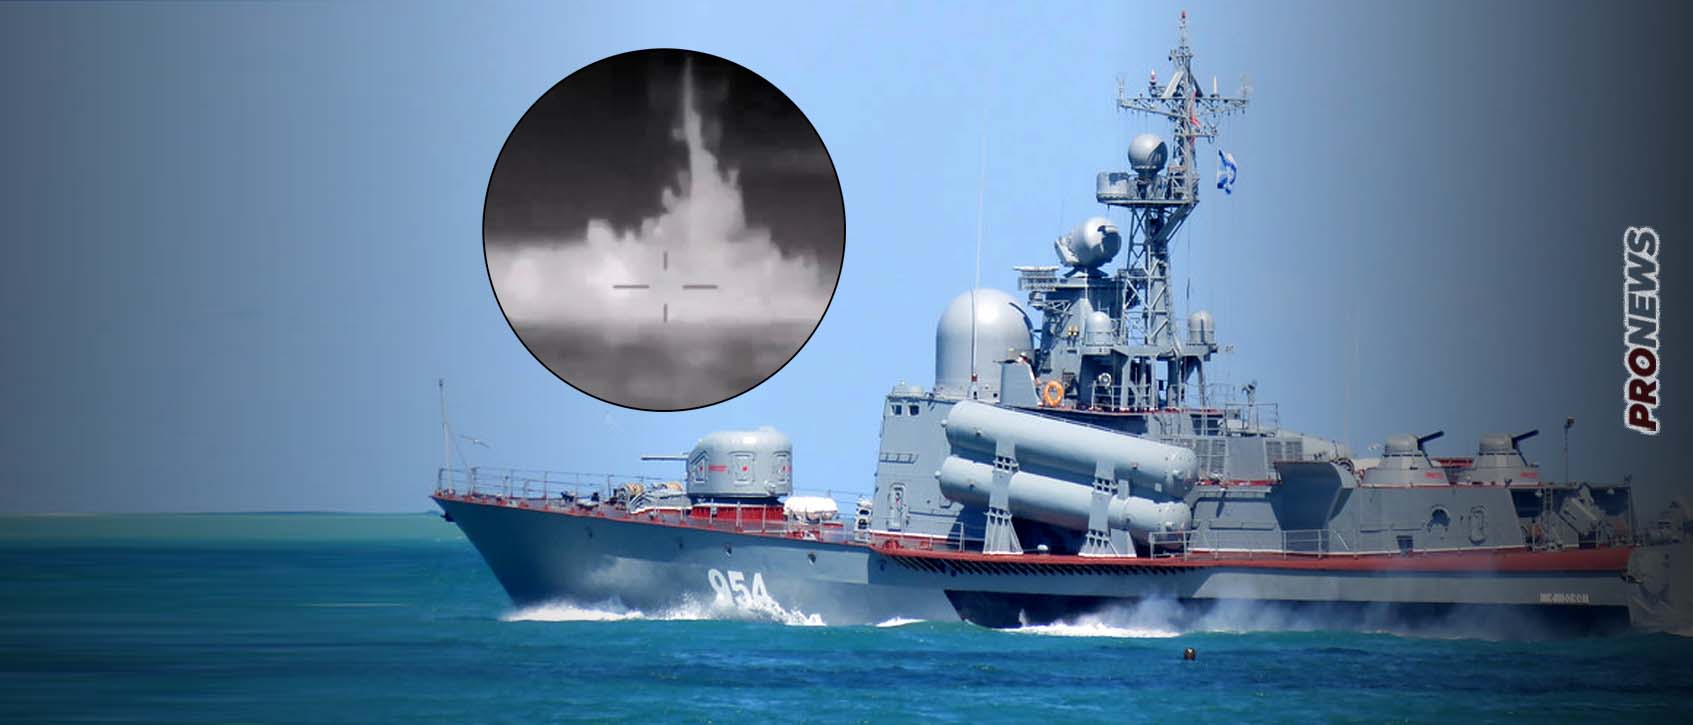 Bίντεο: Ουκρανικά θαλάσσια drones βύθισαν την ρωσική κορβέτα Ivanovets κλάσης Tarantul στην Μαύρη Θάλασσα!